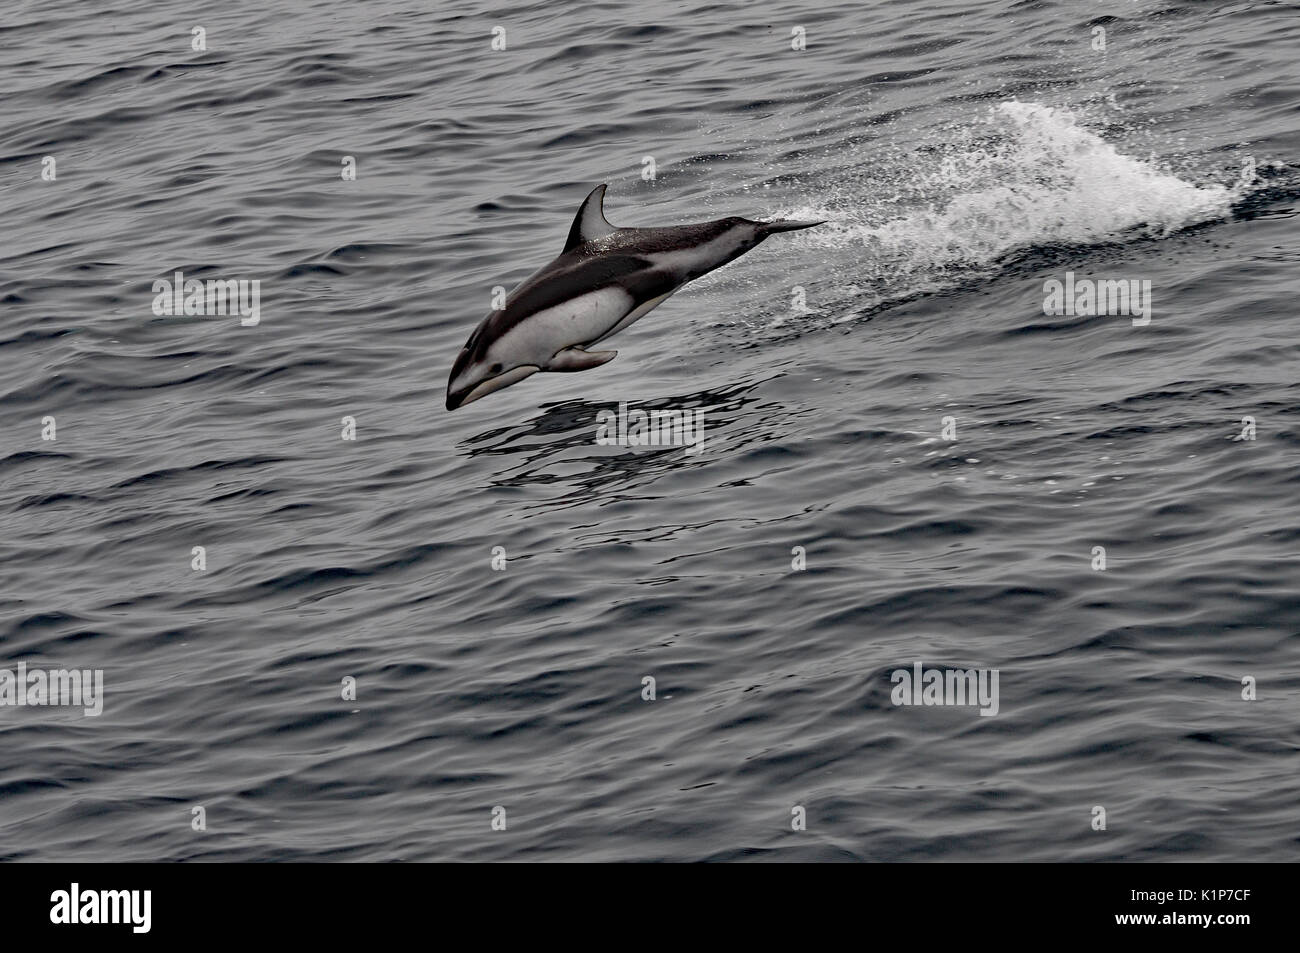 A Breaching Dolphin Stock Photo